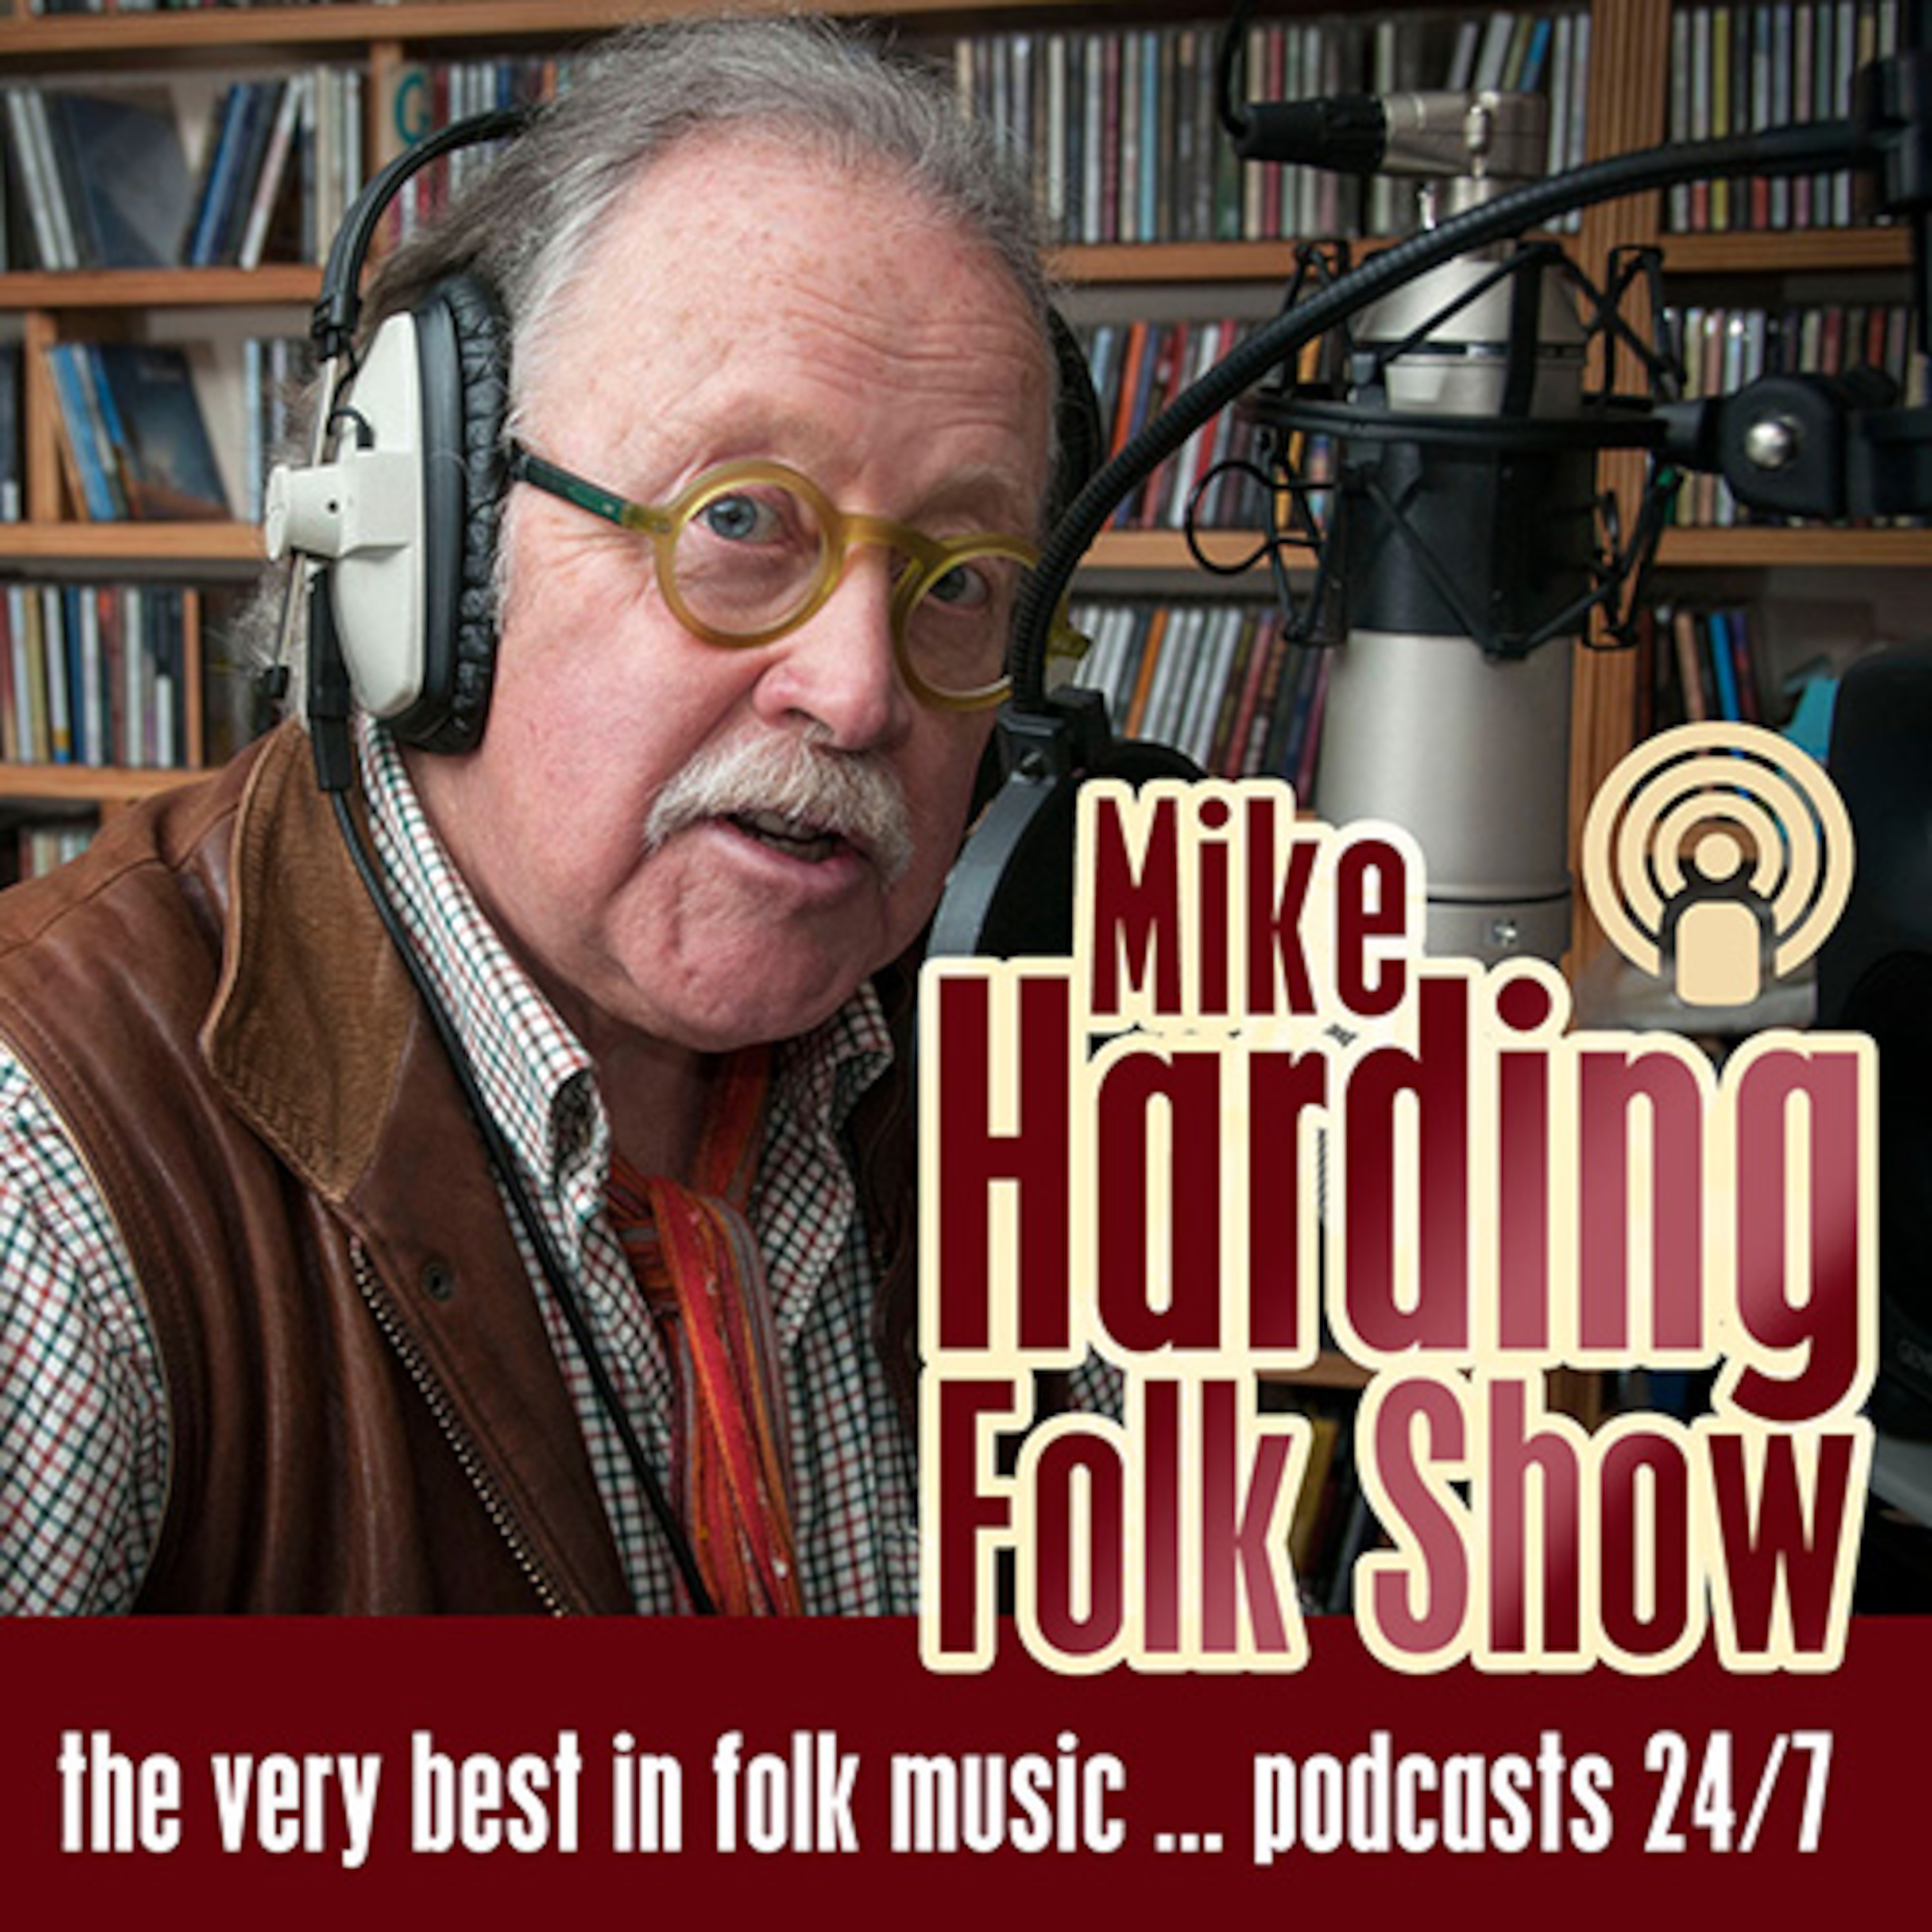 Mike Harding Folk Show 126